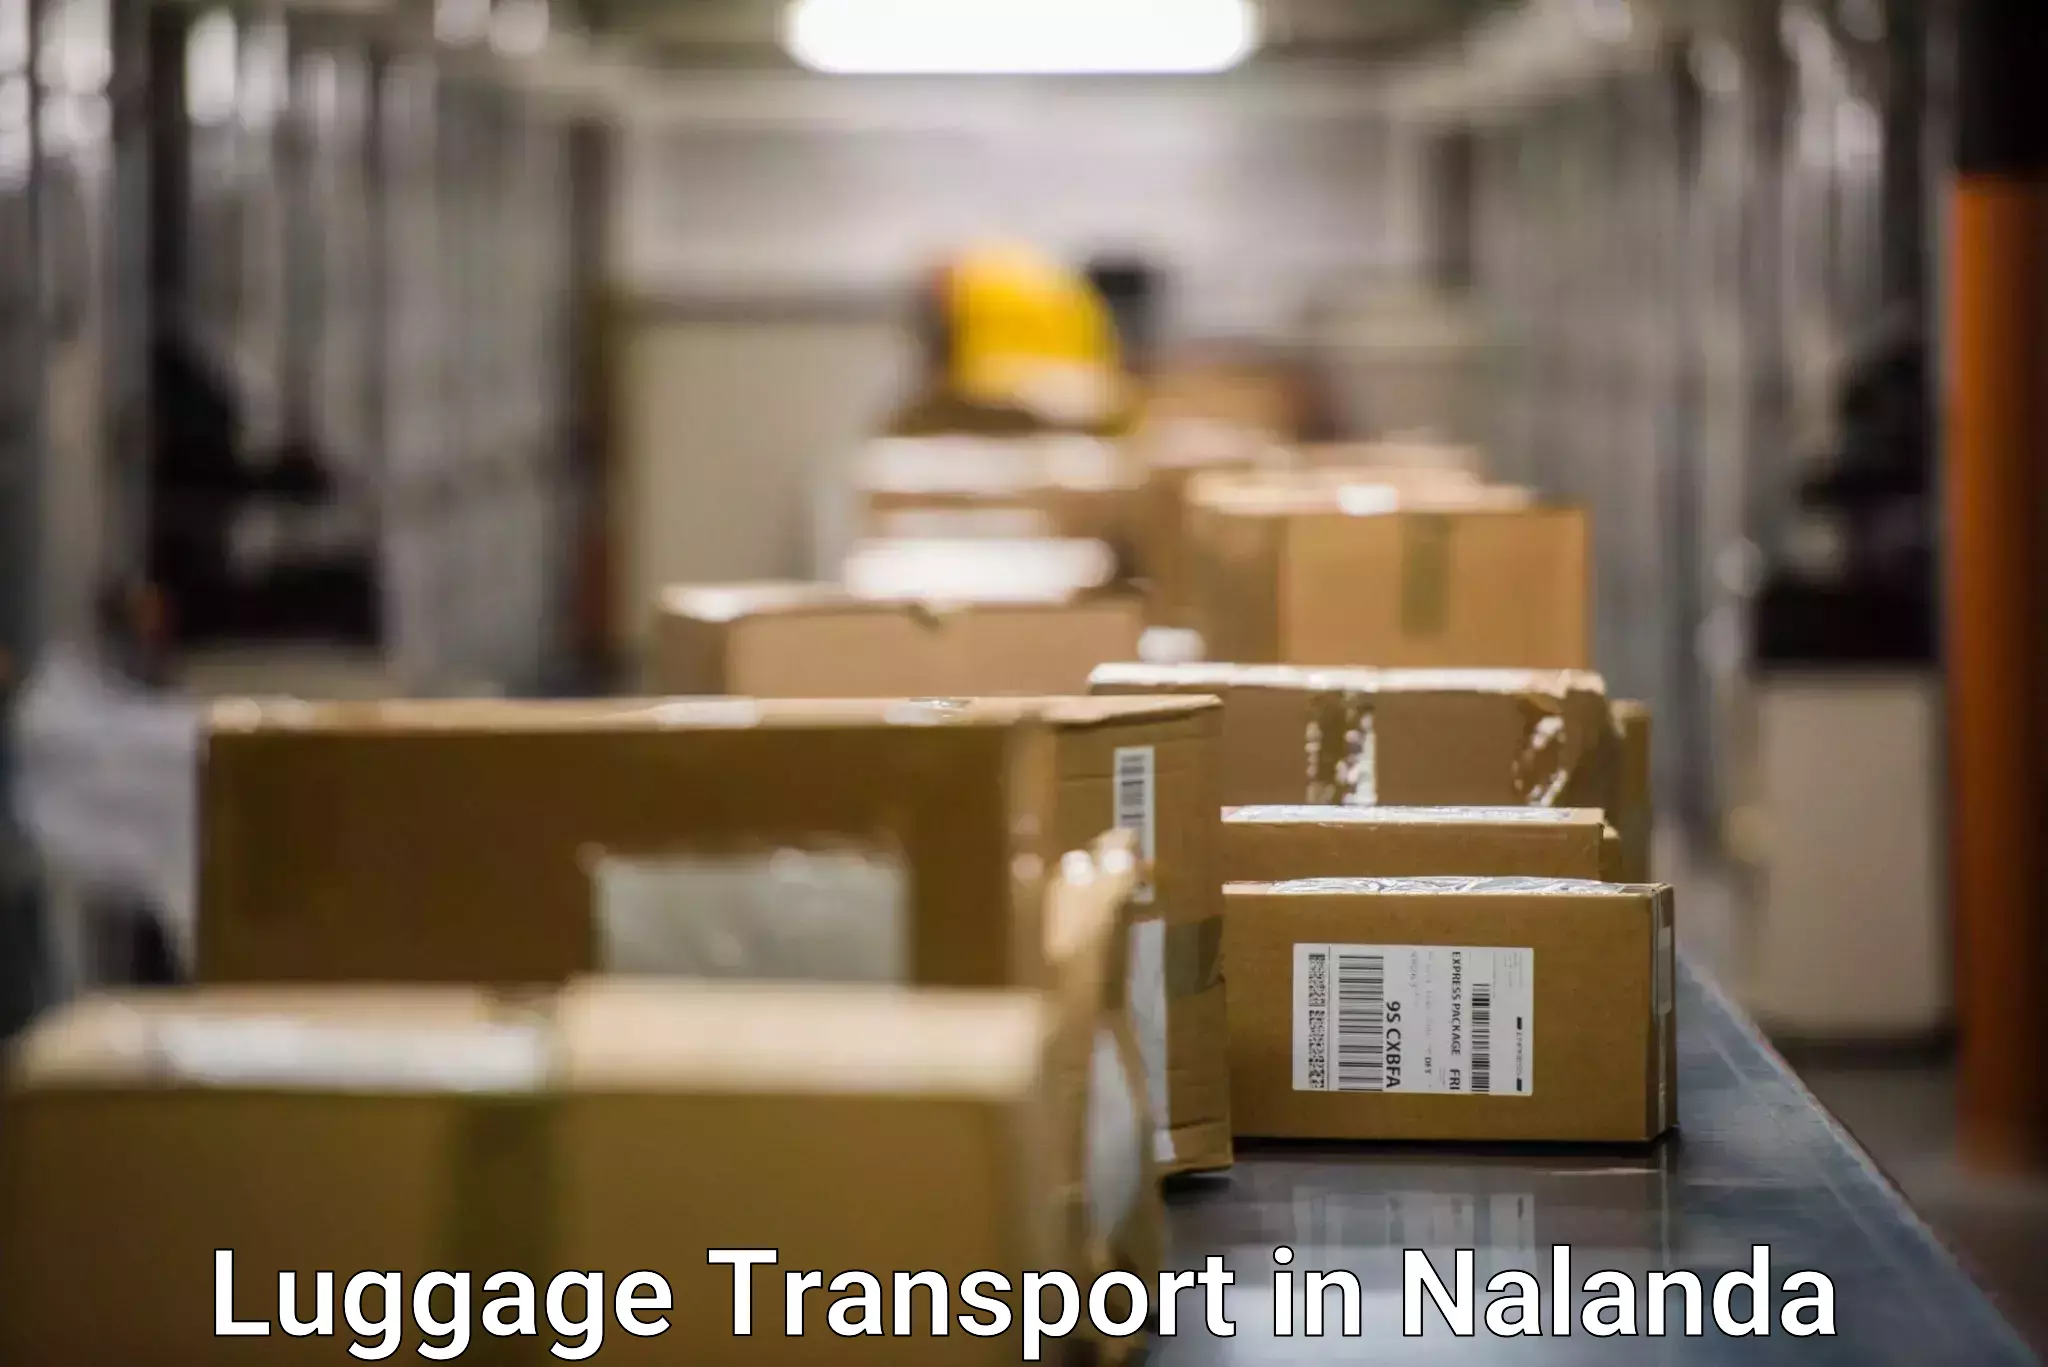 Business luggage transport in Nalanda